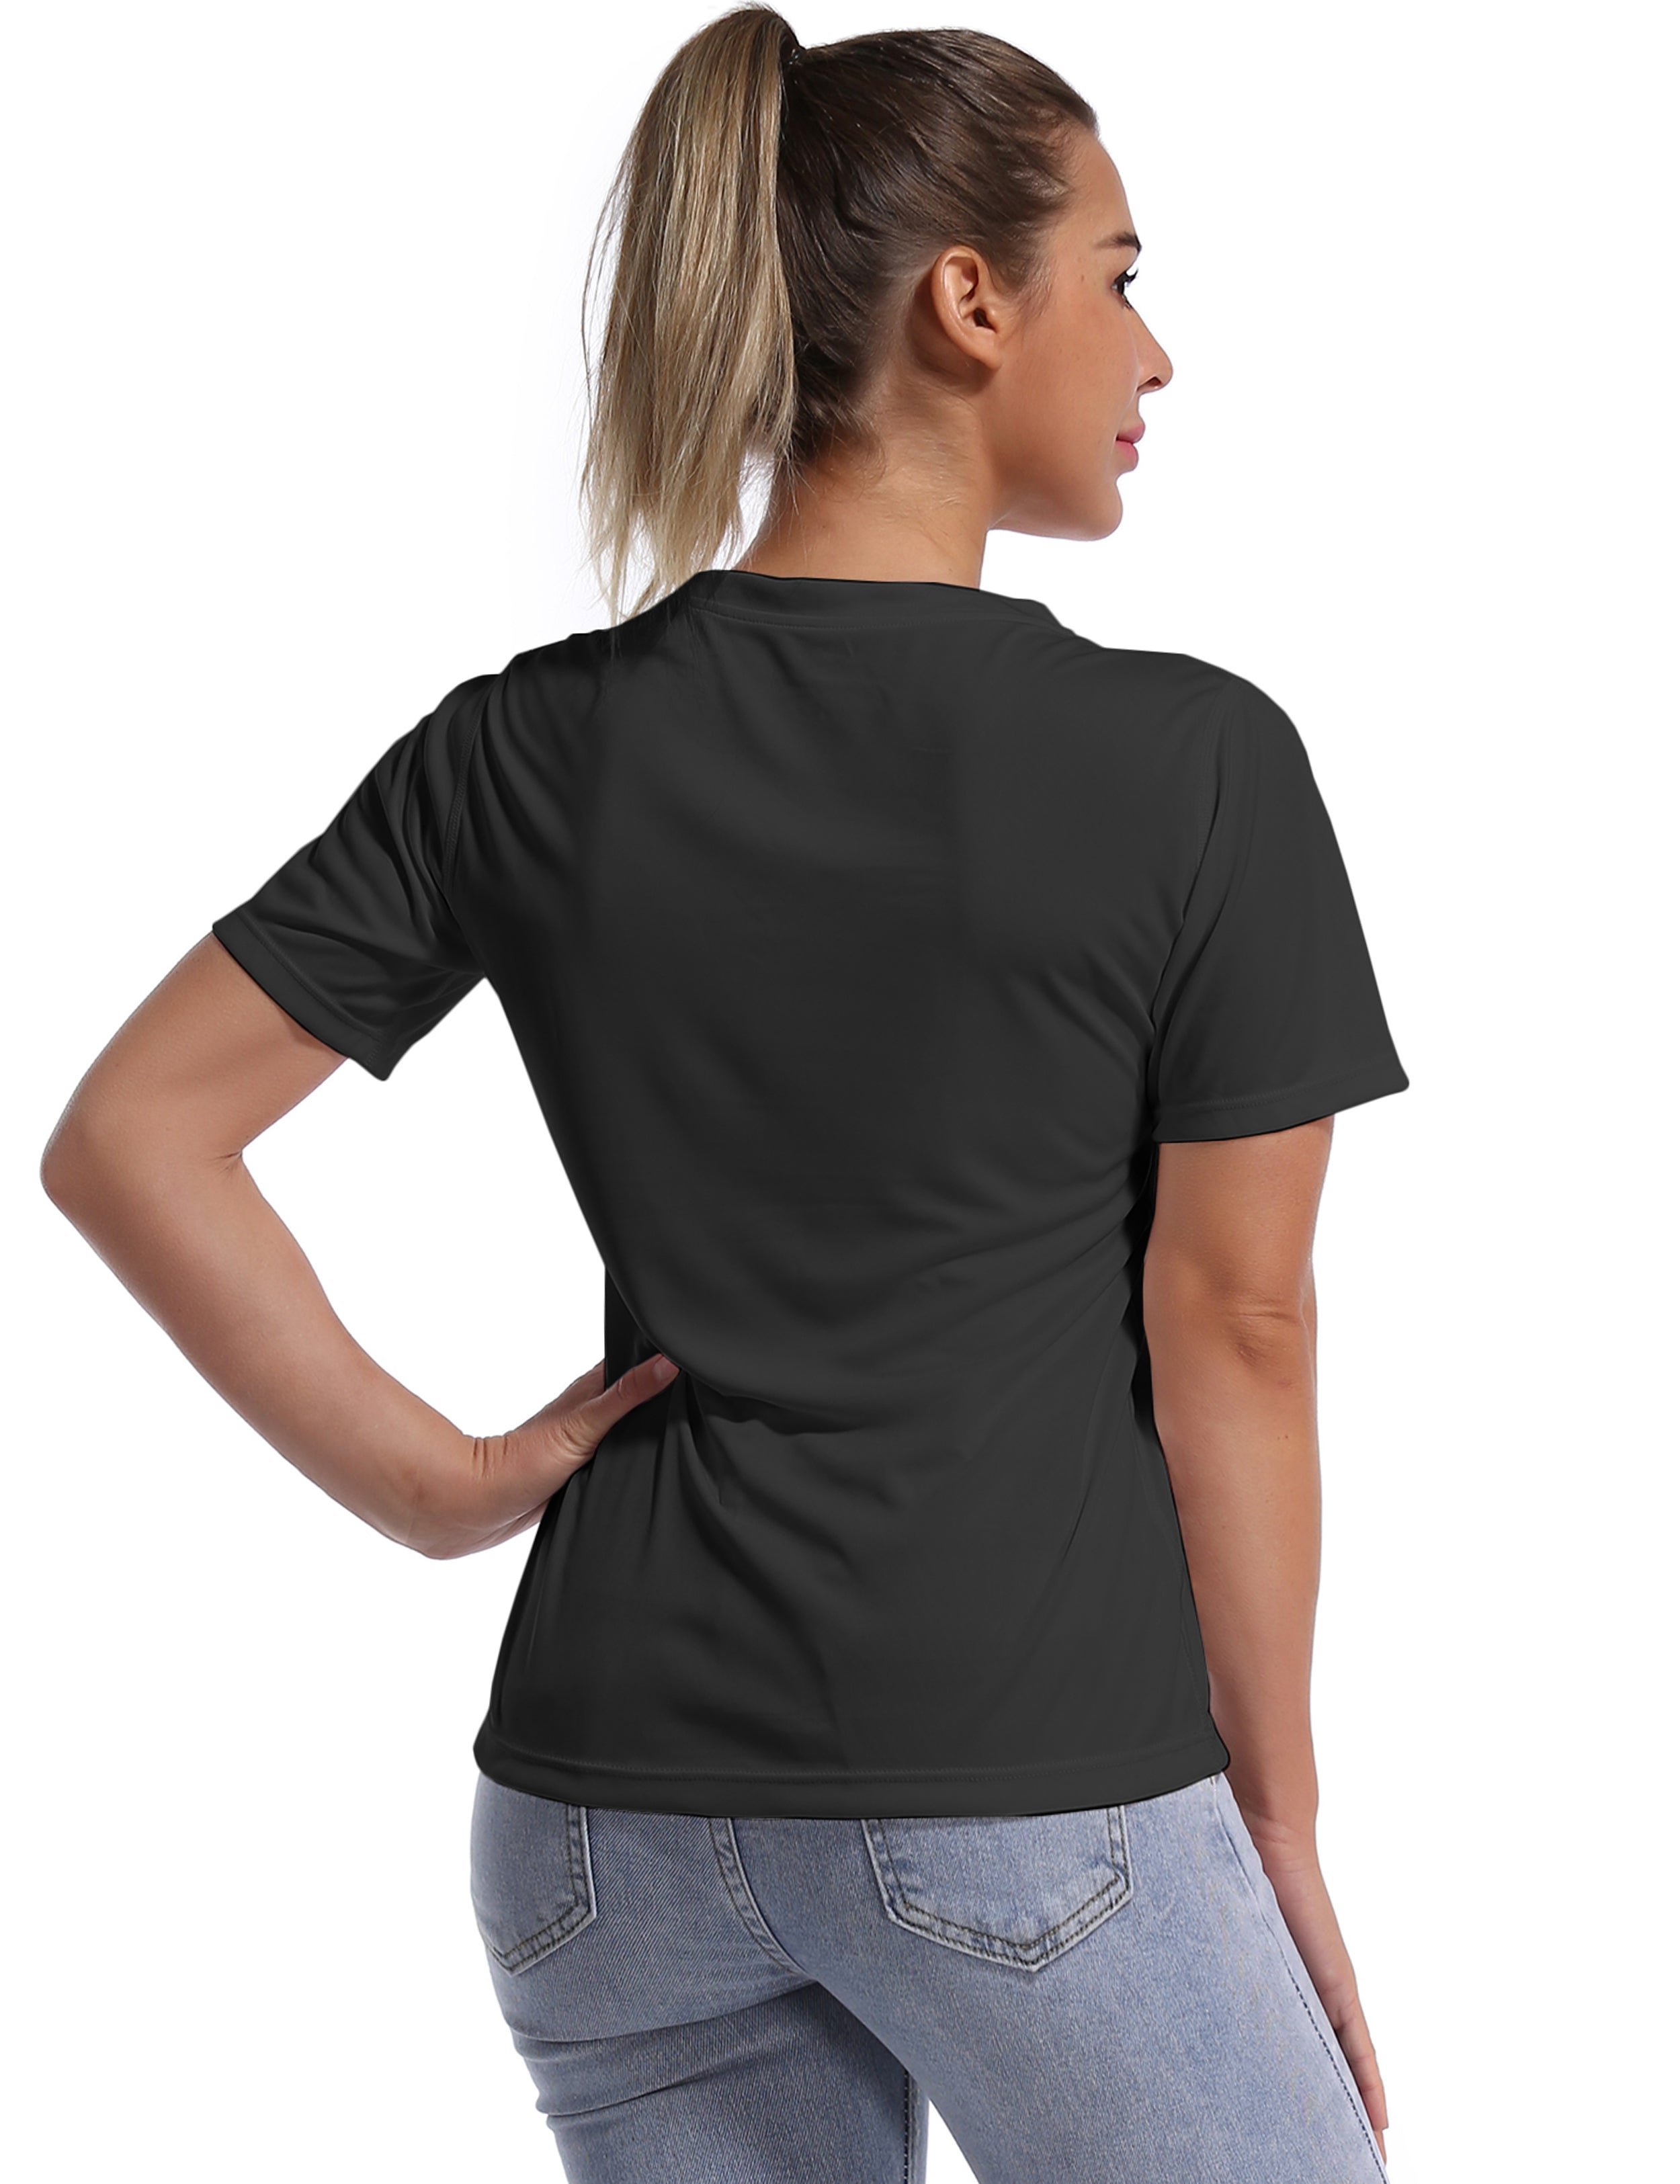 V-Neck Short Sleeve Athletic Shirts black_Pilates